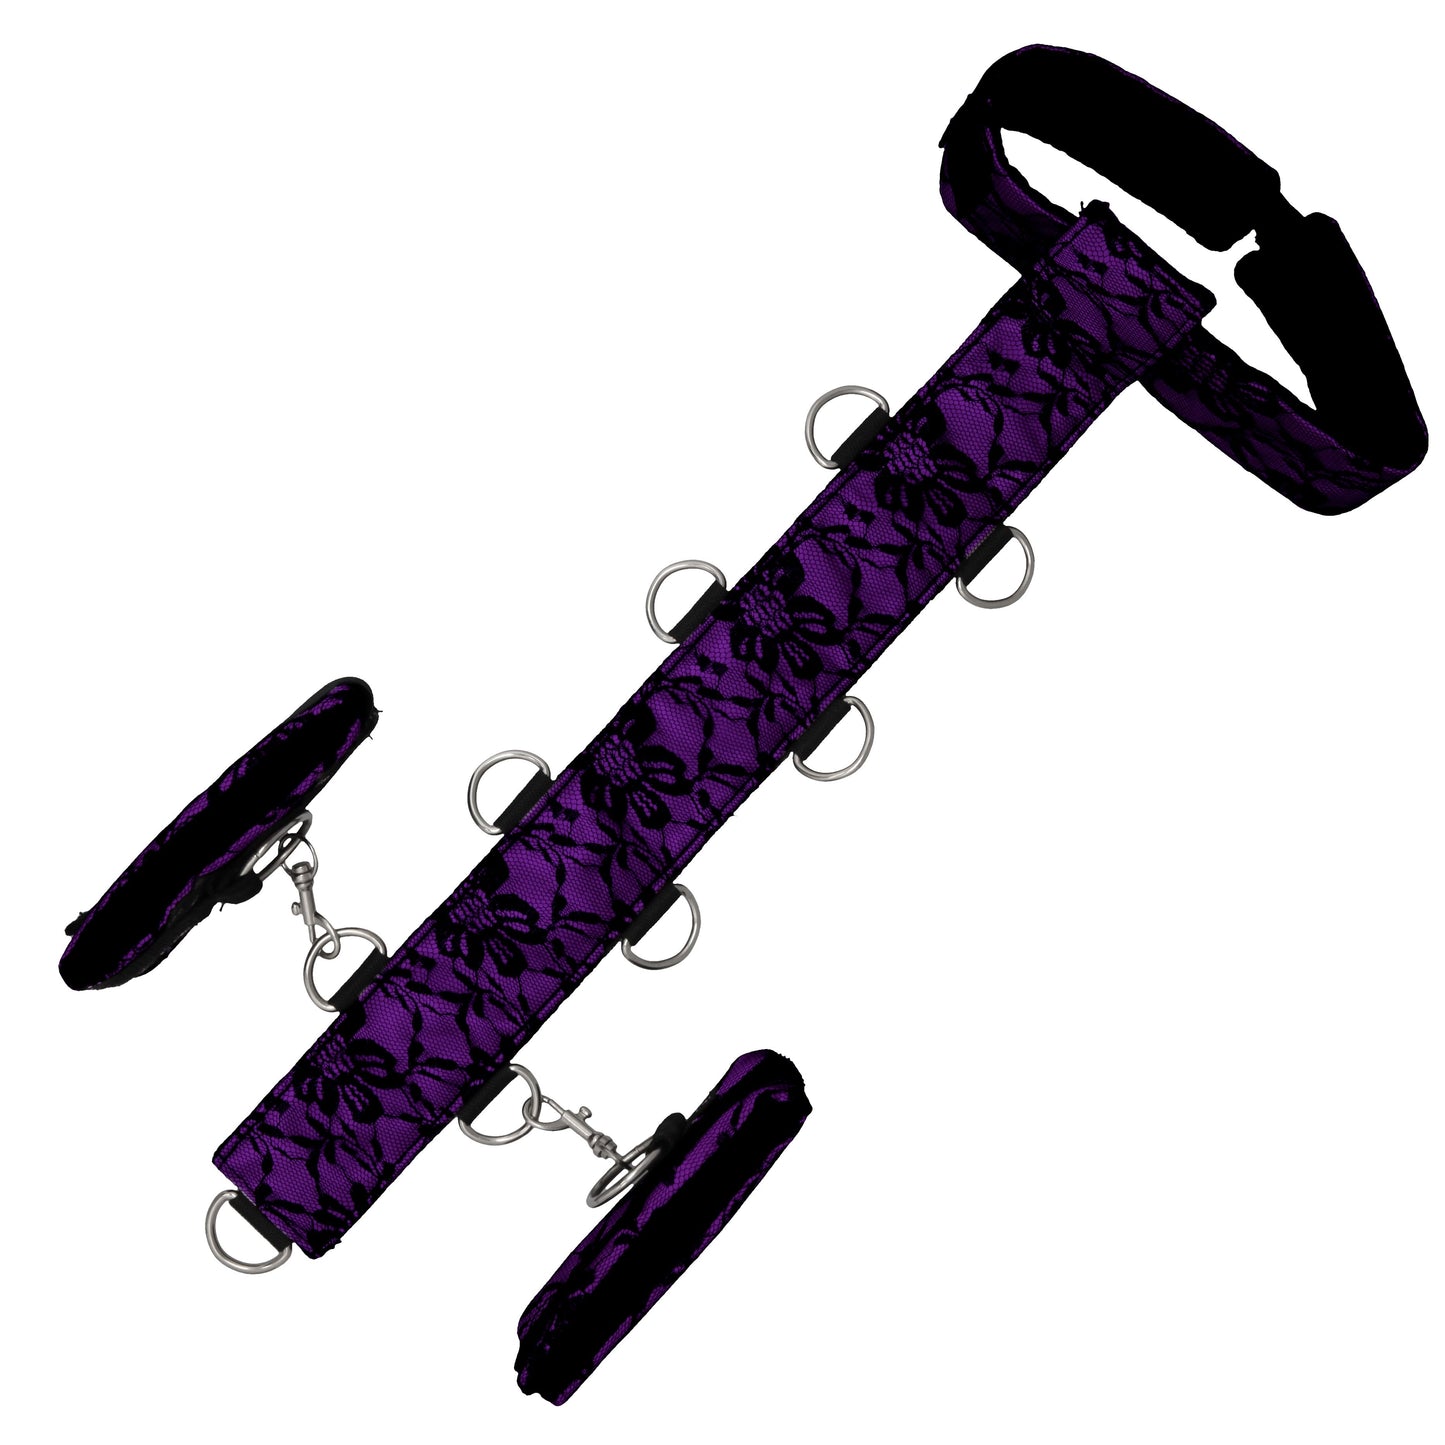 Neck and Wrist Body Restraint - Purple